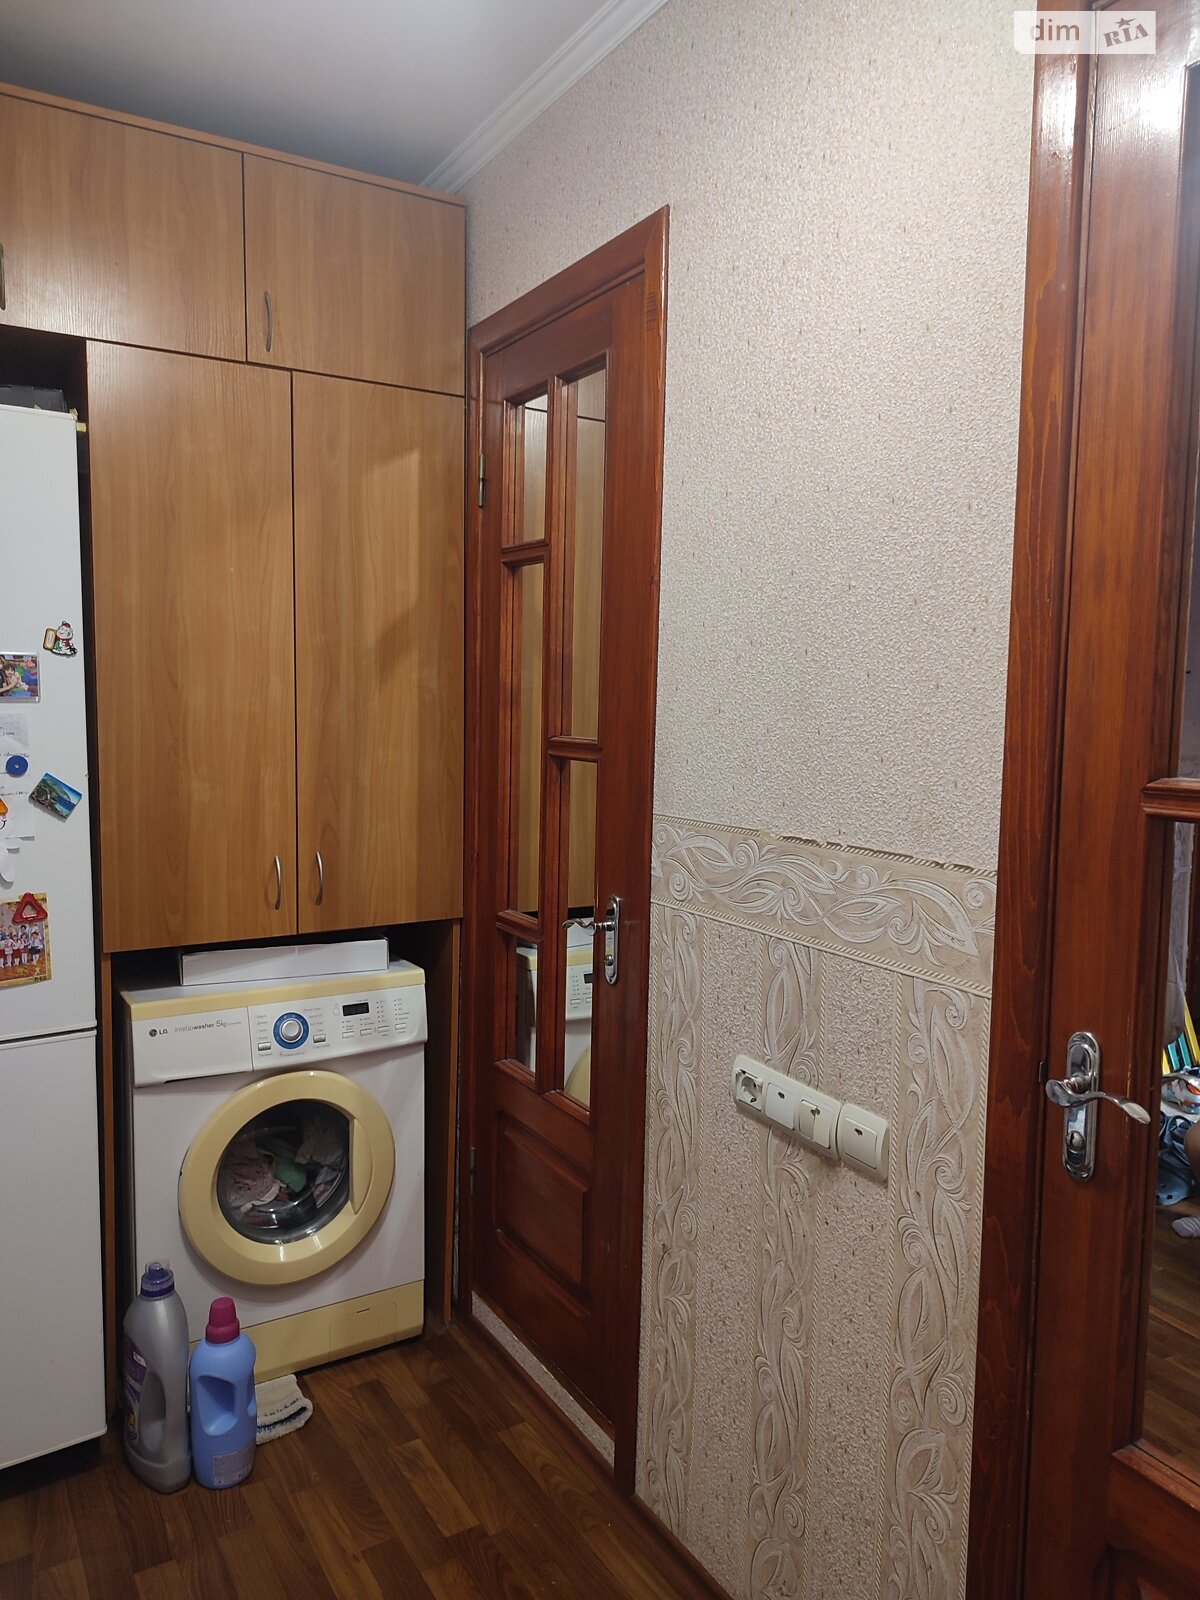 Продажа двухкомнатной квартиры в Черкассах, на ул. Казацкая 7, район Мытница-речпорт фото 1